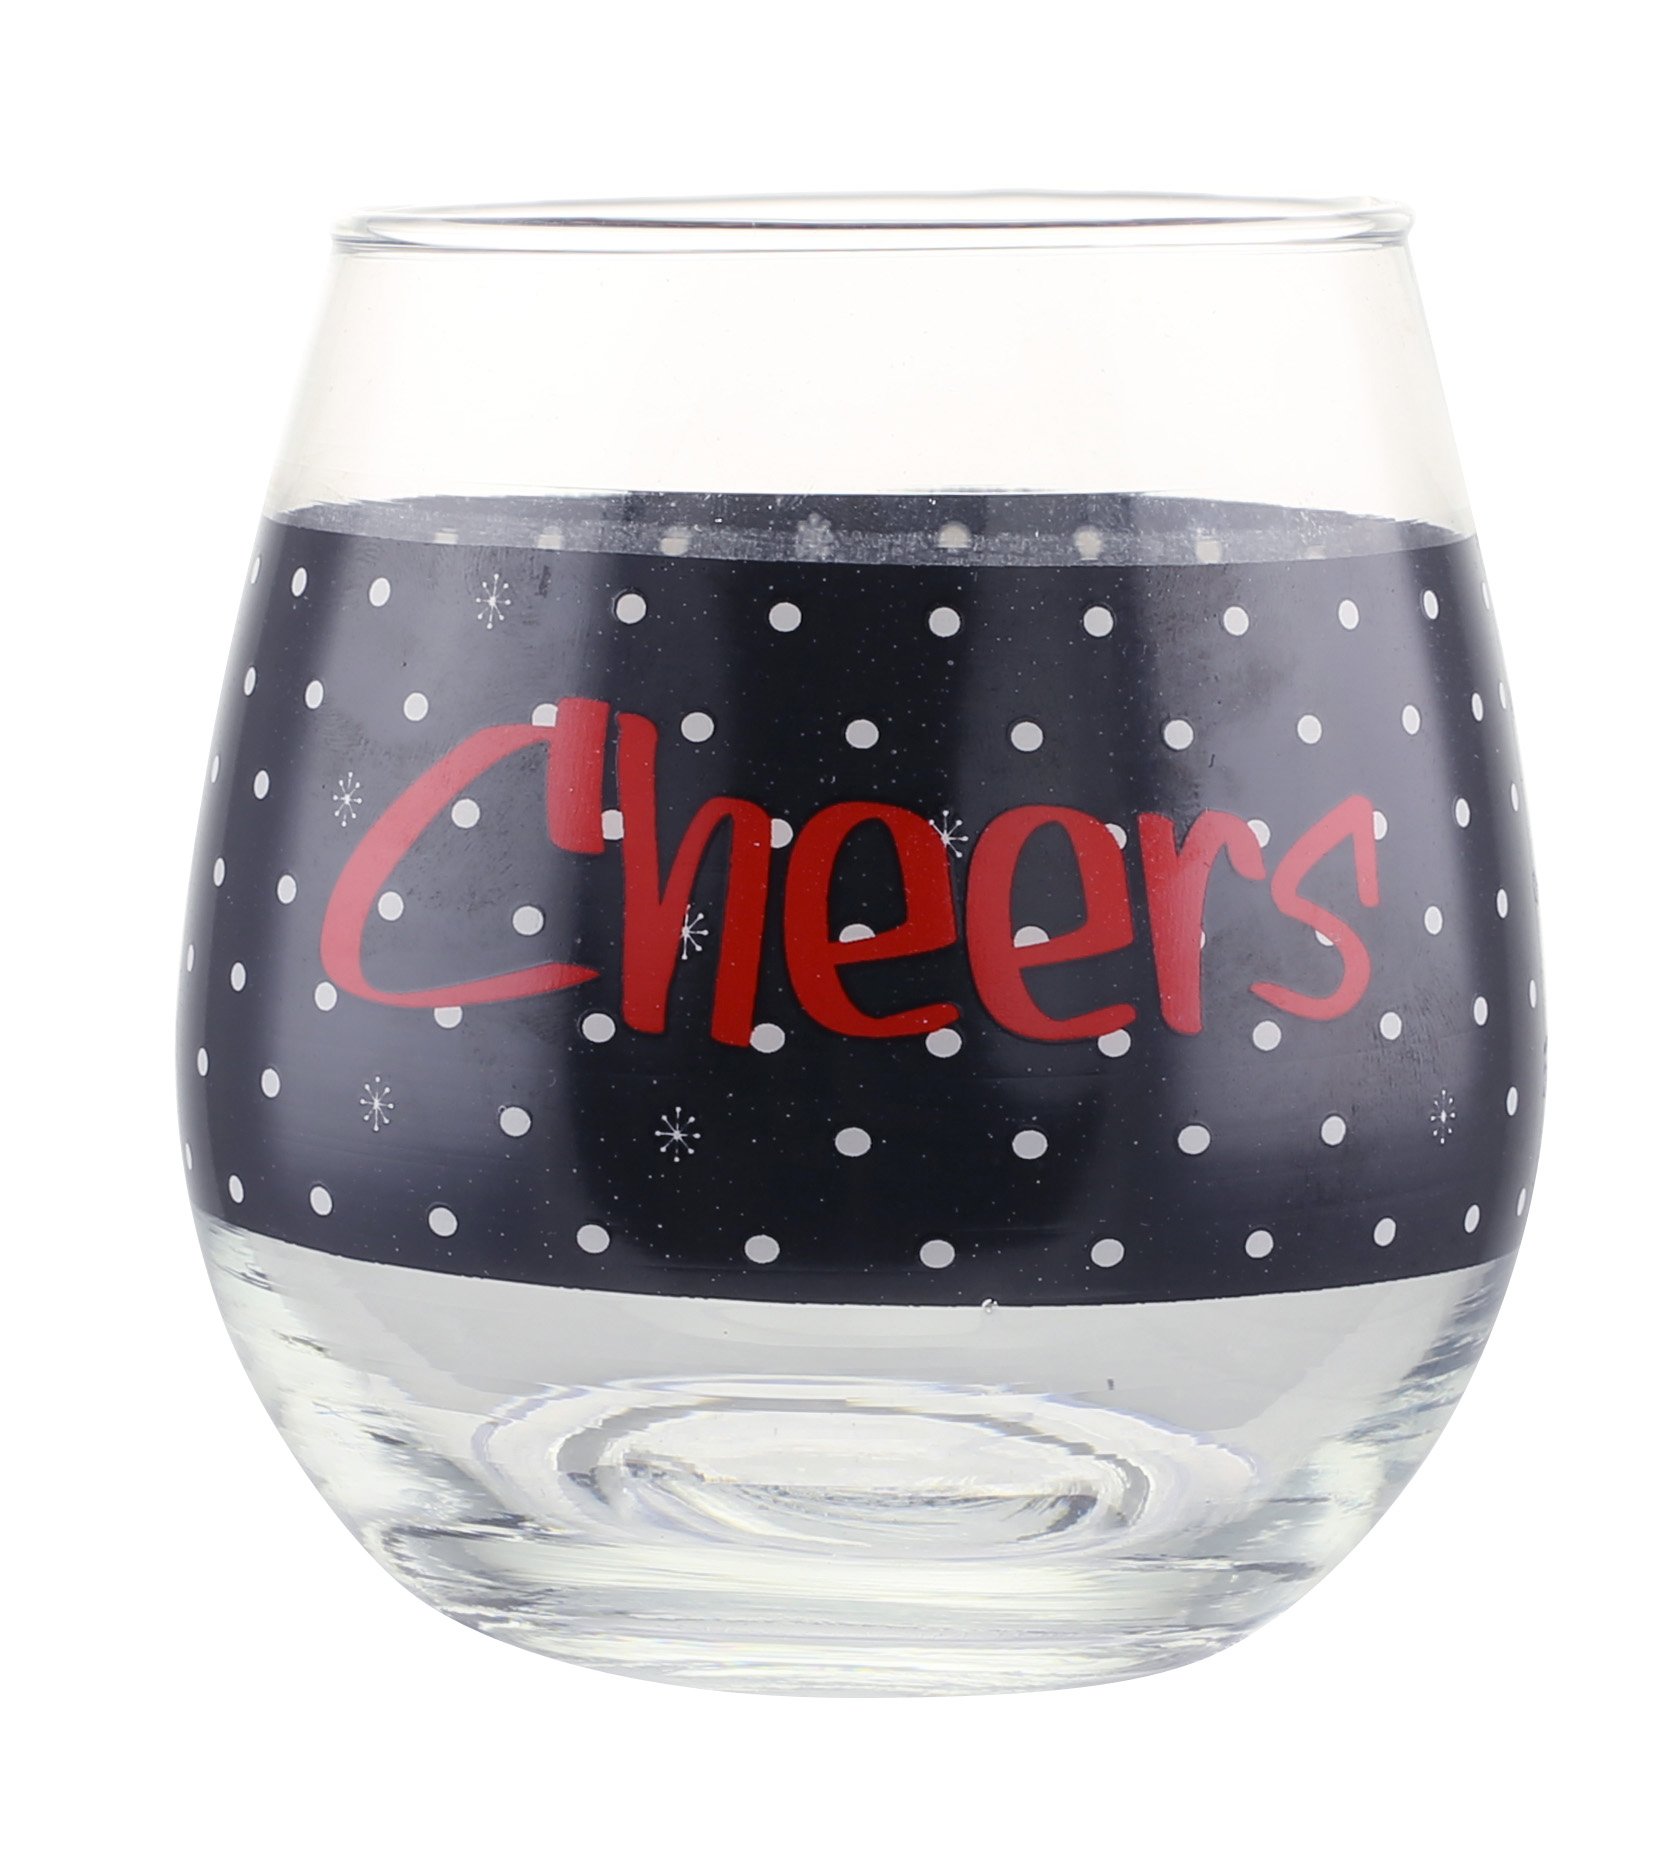 KOVOT Holiday"CHEERS" and"JOY" Stemless Wine Glass Set | 16 oz | Christmas Wine Glasses (2 Glasses)